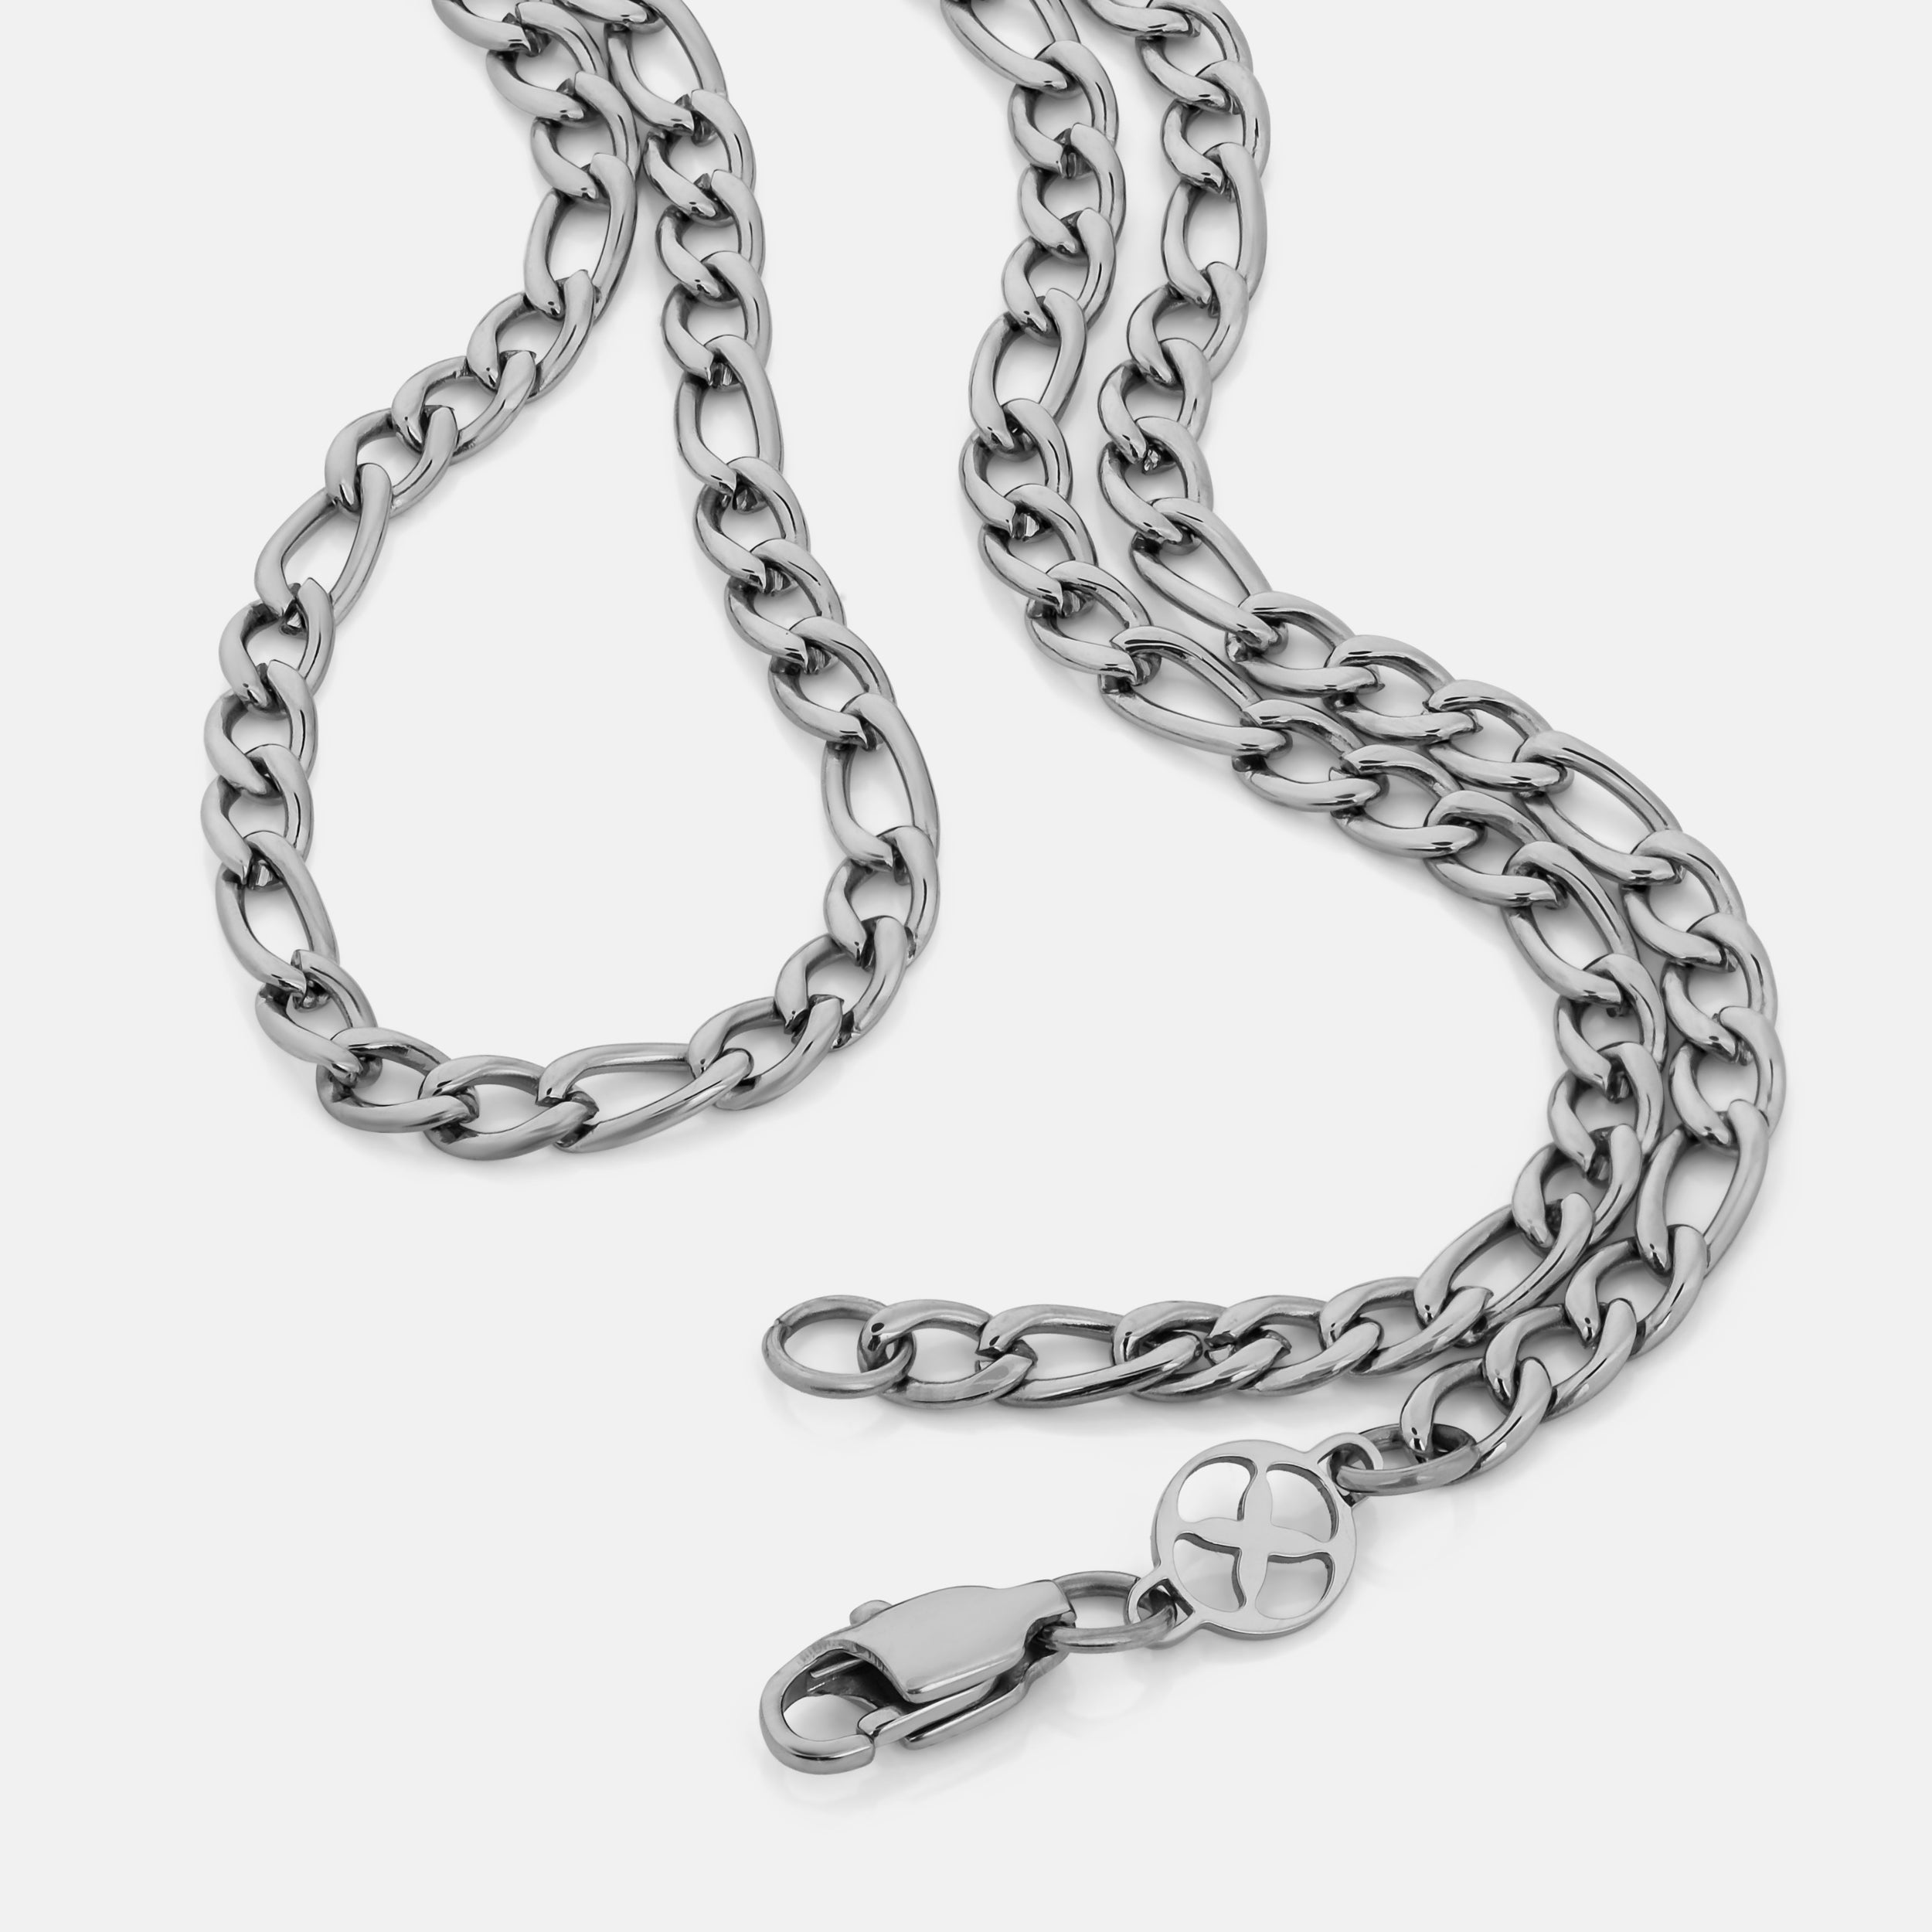 Buy Oxidized Finish Darkened Silver Stainless Steel 4mm Franco Chain Online  - Inox Jewelry India